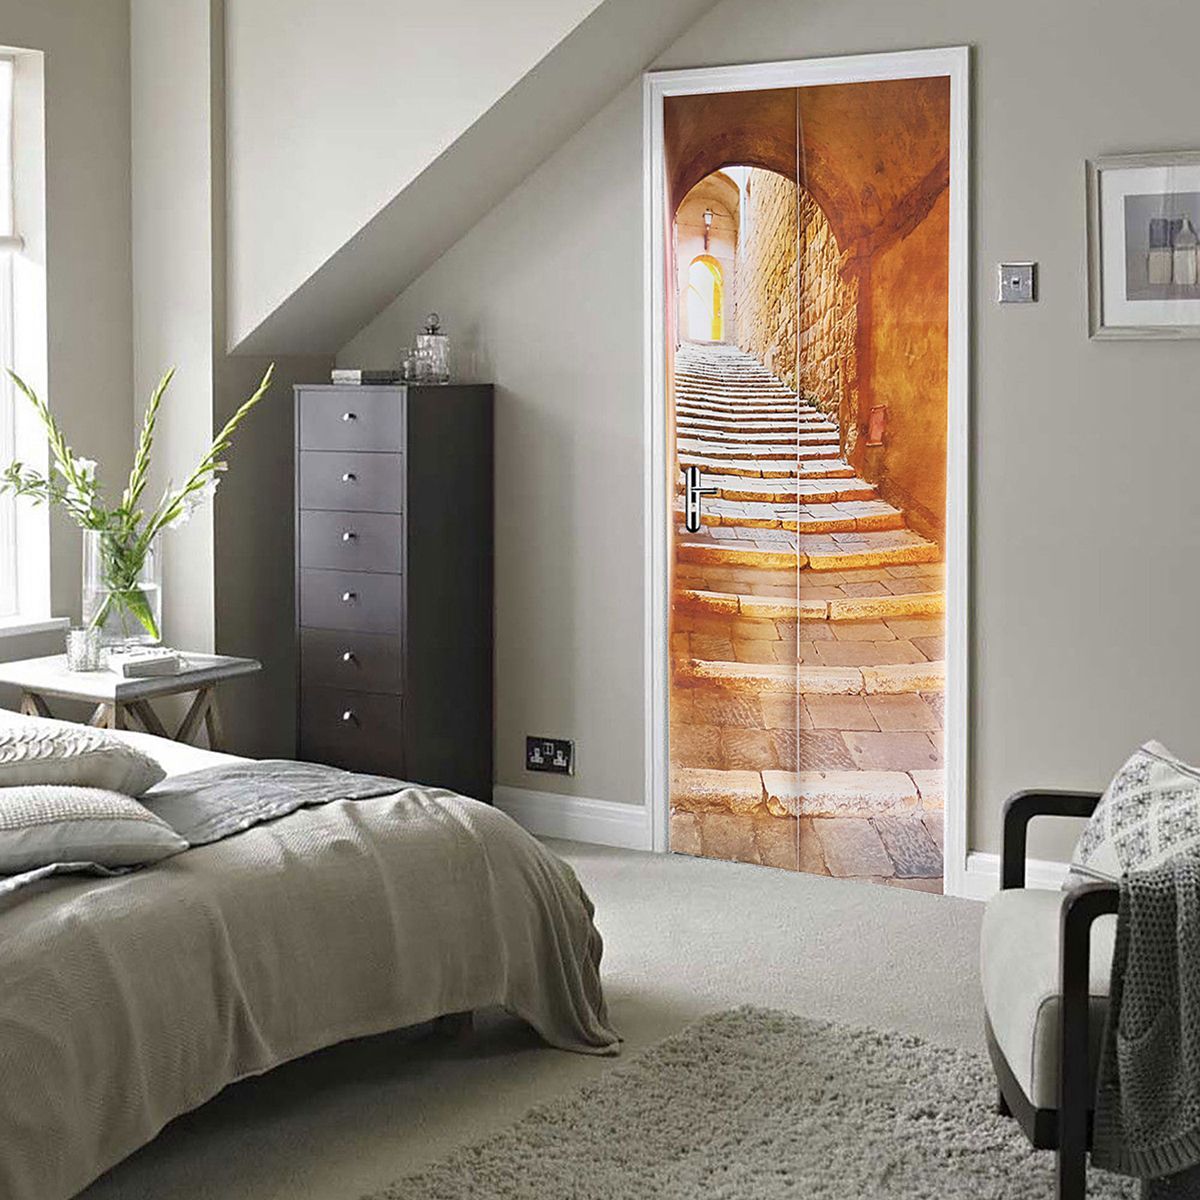 3D-Stone-Stair-Art-Door-Wall-Fridge-Sticker-Decal-Self-Adhesive-Mural-Home-Office-Decor-1369449